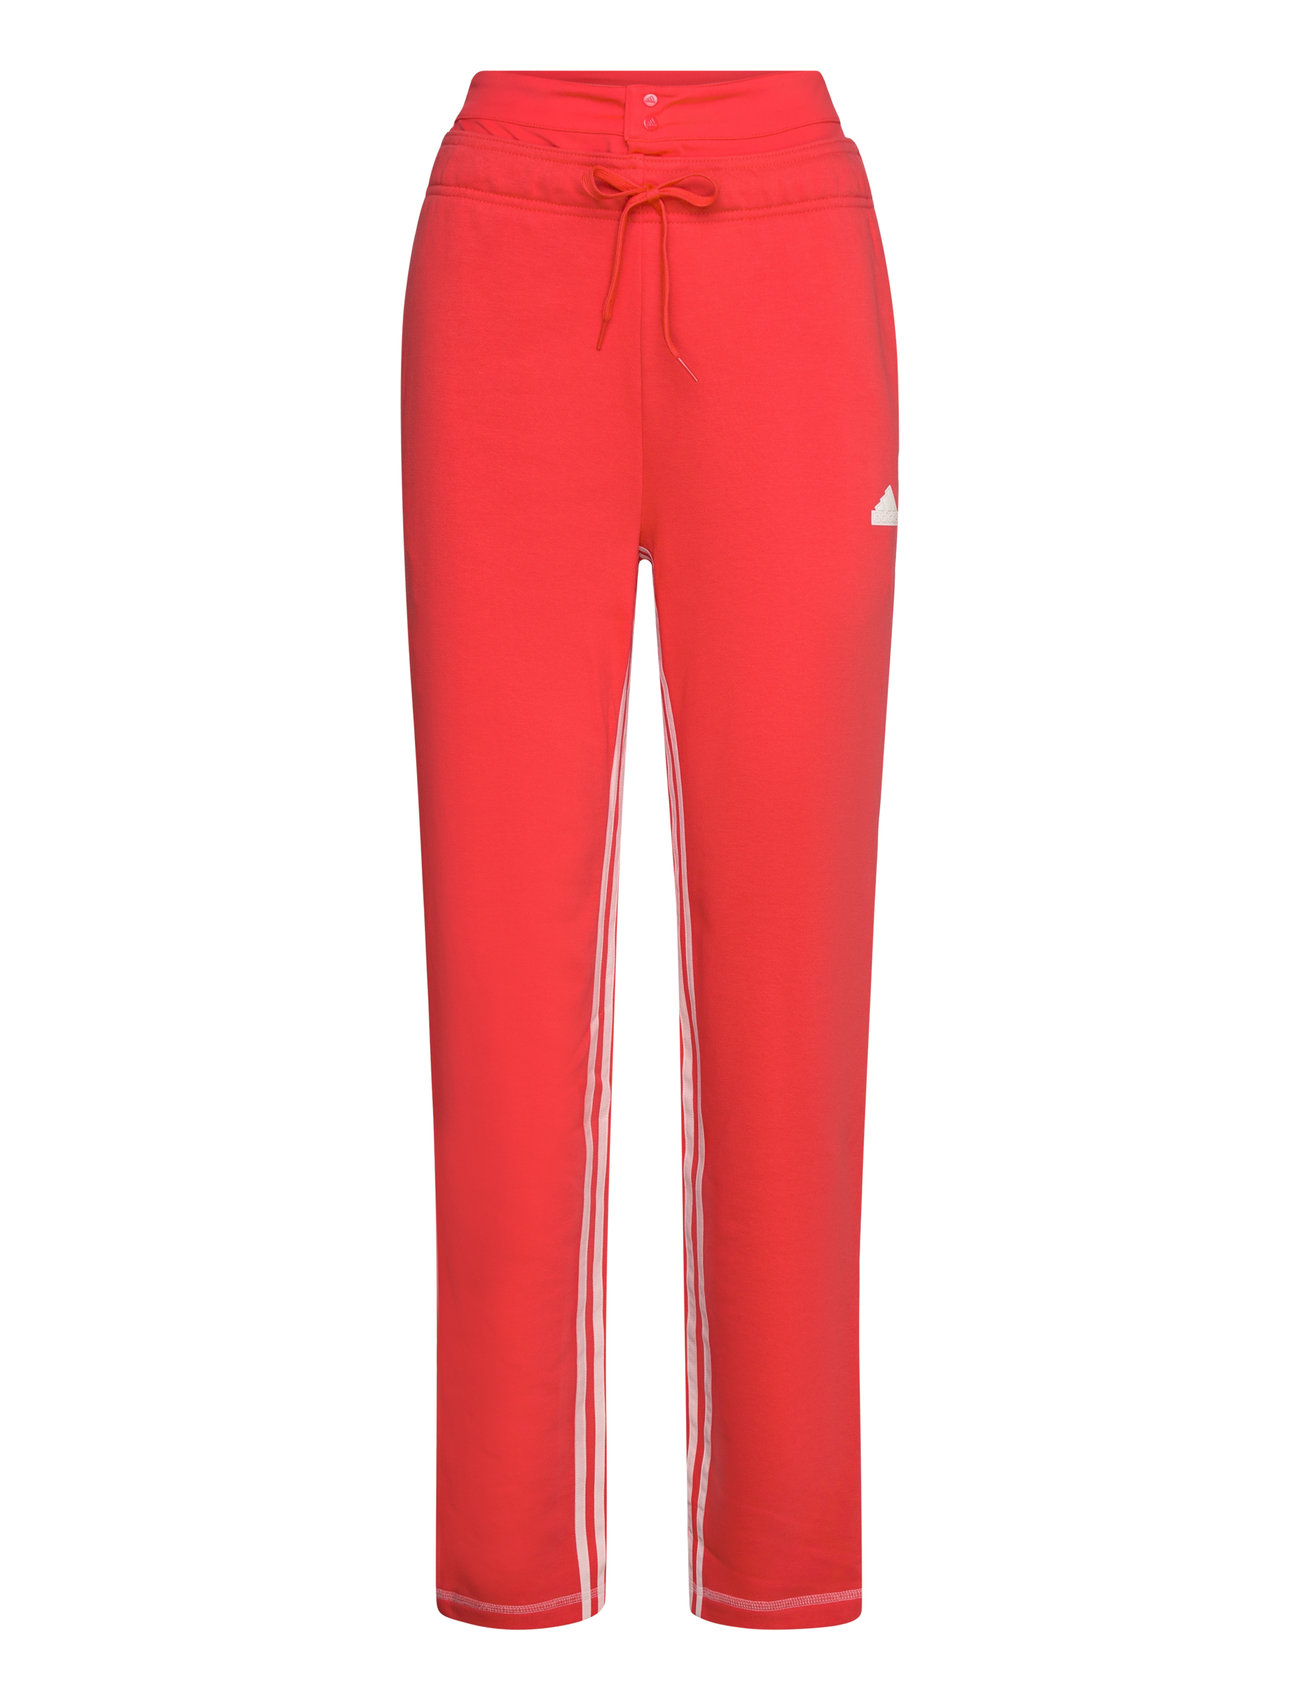 Dance Knt Pt Sport Sweatpants Red Adidas Sportswear